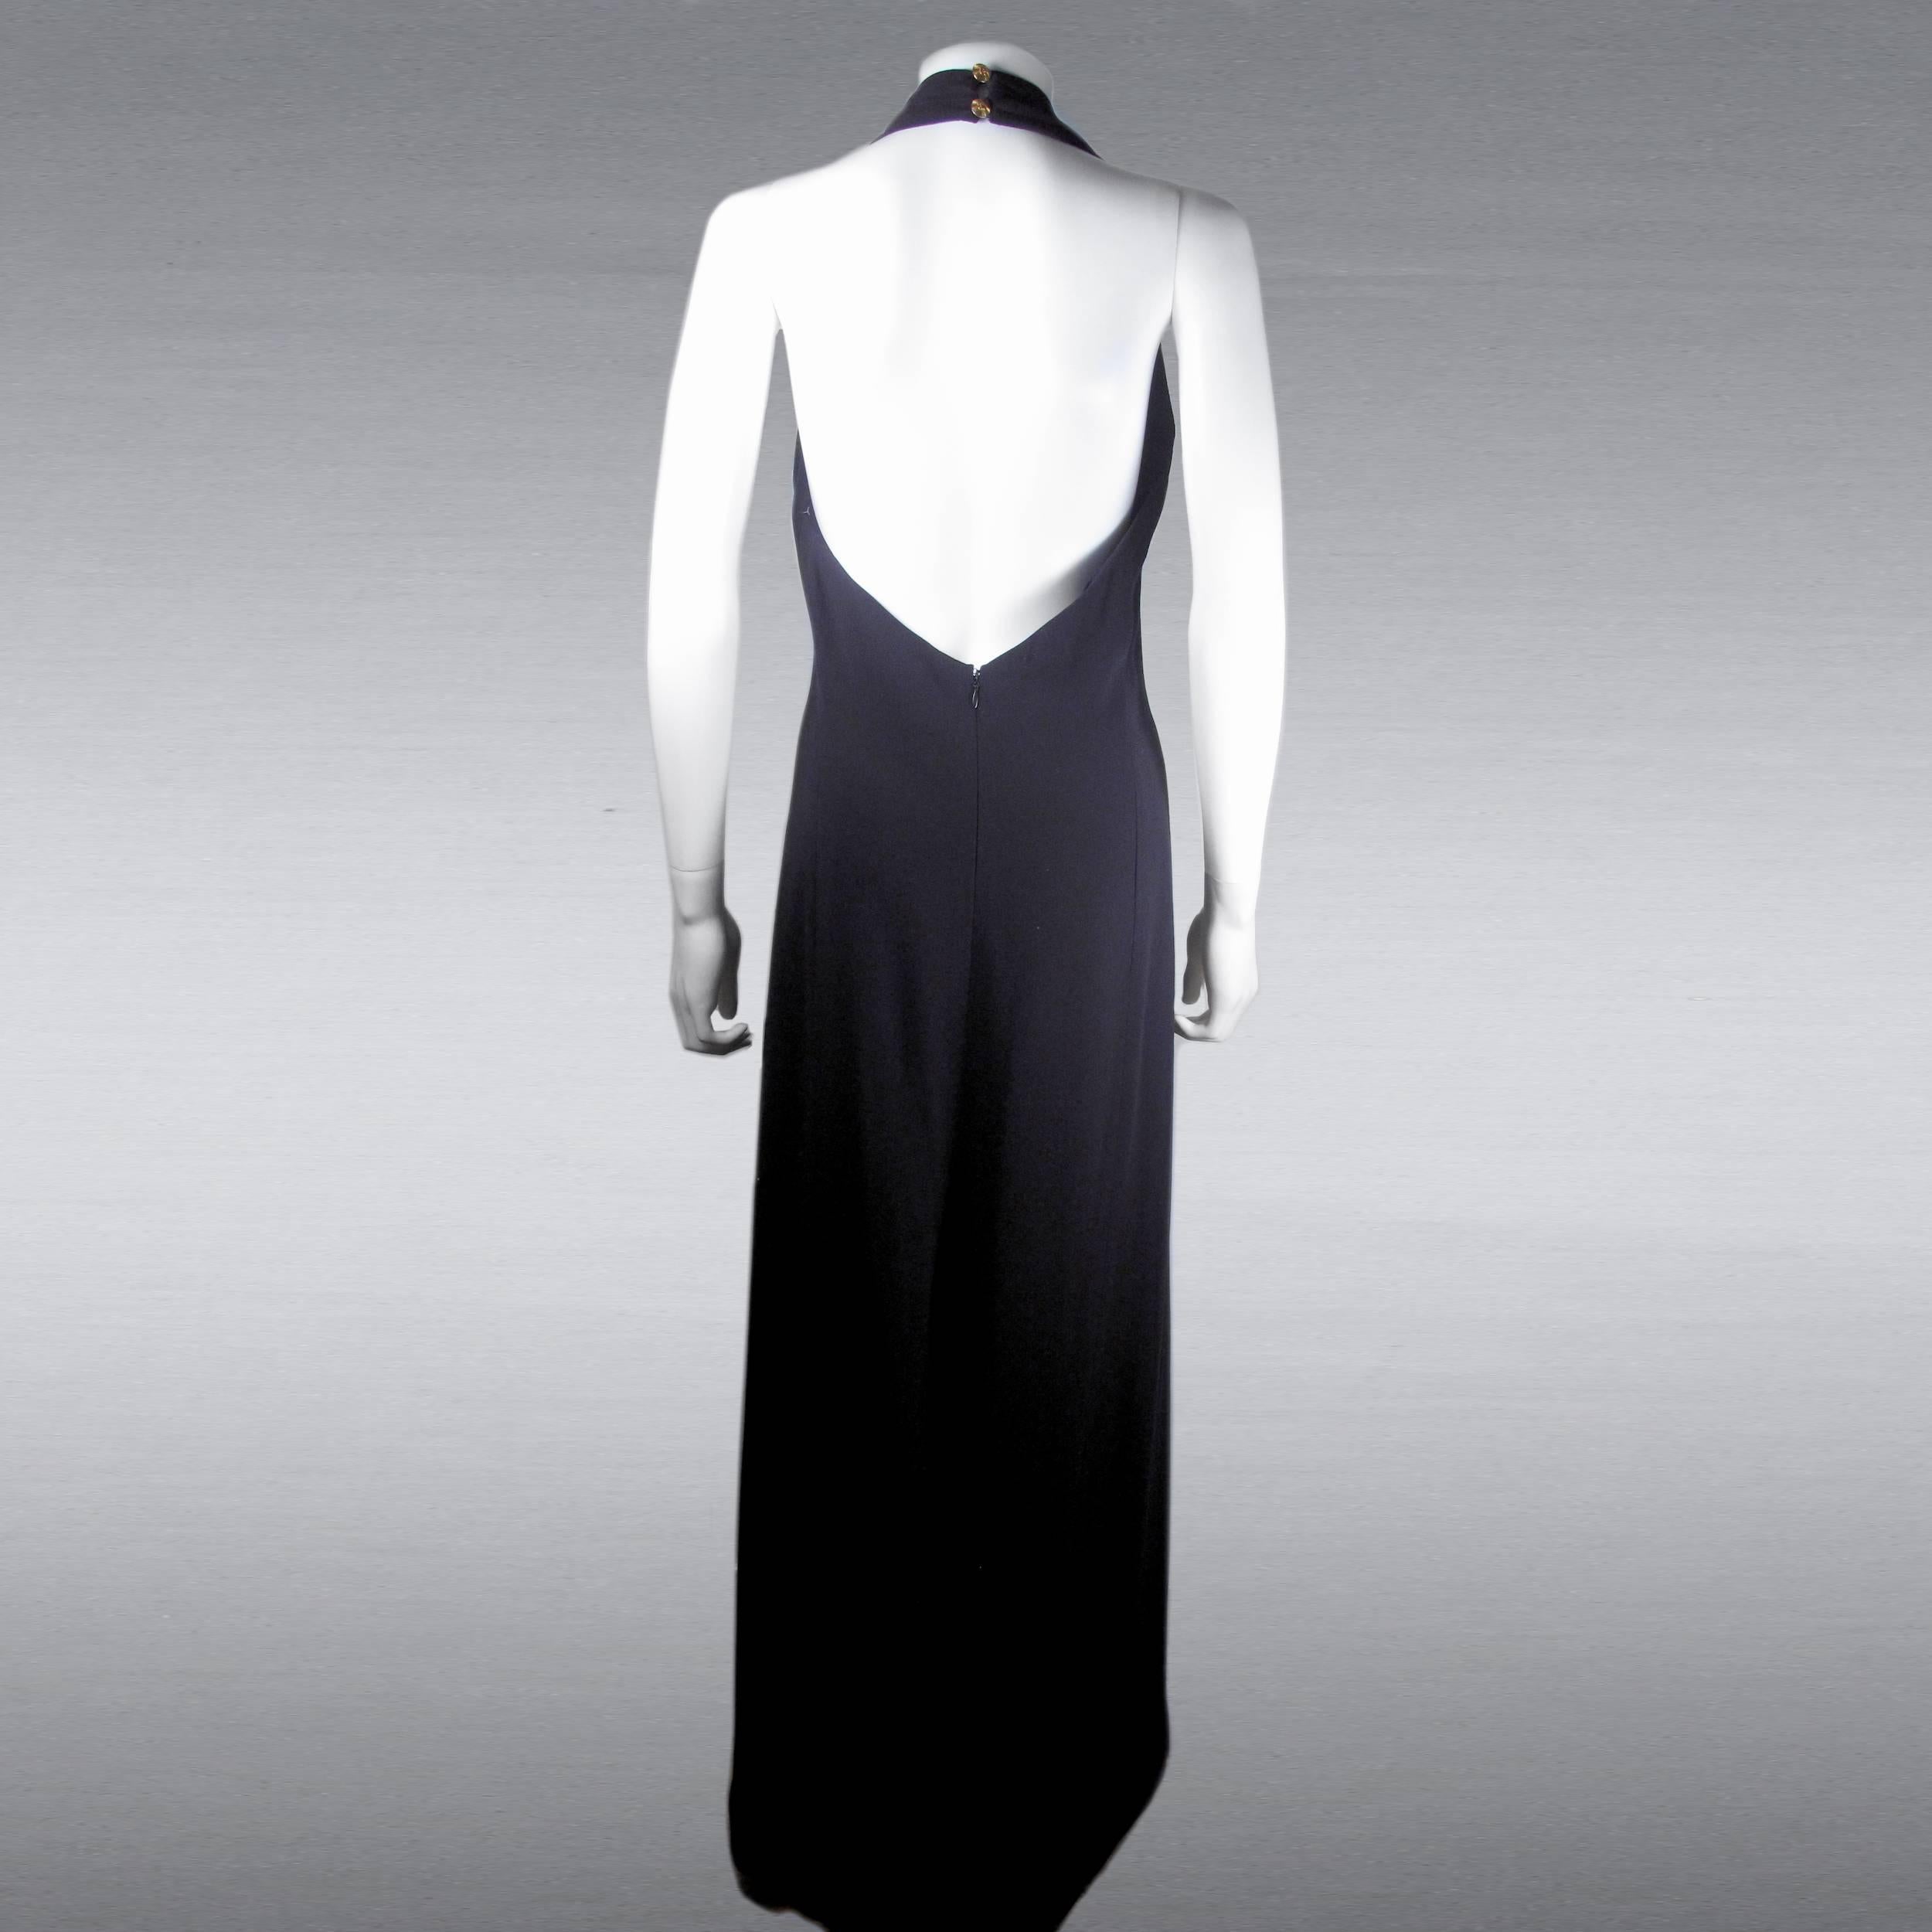 Chanel - Vintage Halter Dress

Size:  US 8 - 40

Color: Dark Navy

Material:  100% Wool

100% Silk Lining

------------------------------------------------------------

Details:

- sleeveless

- halter

- gold tone hardware

- cc